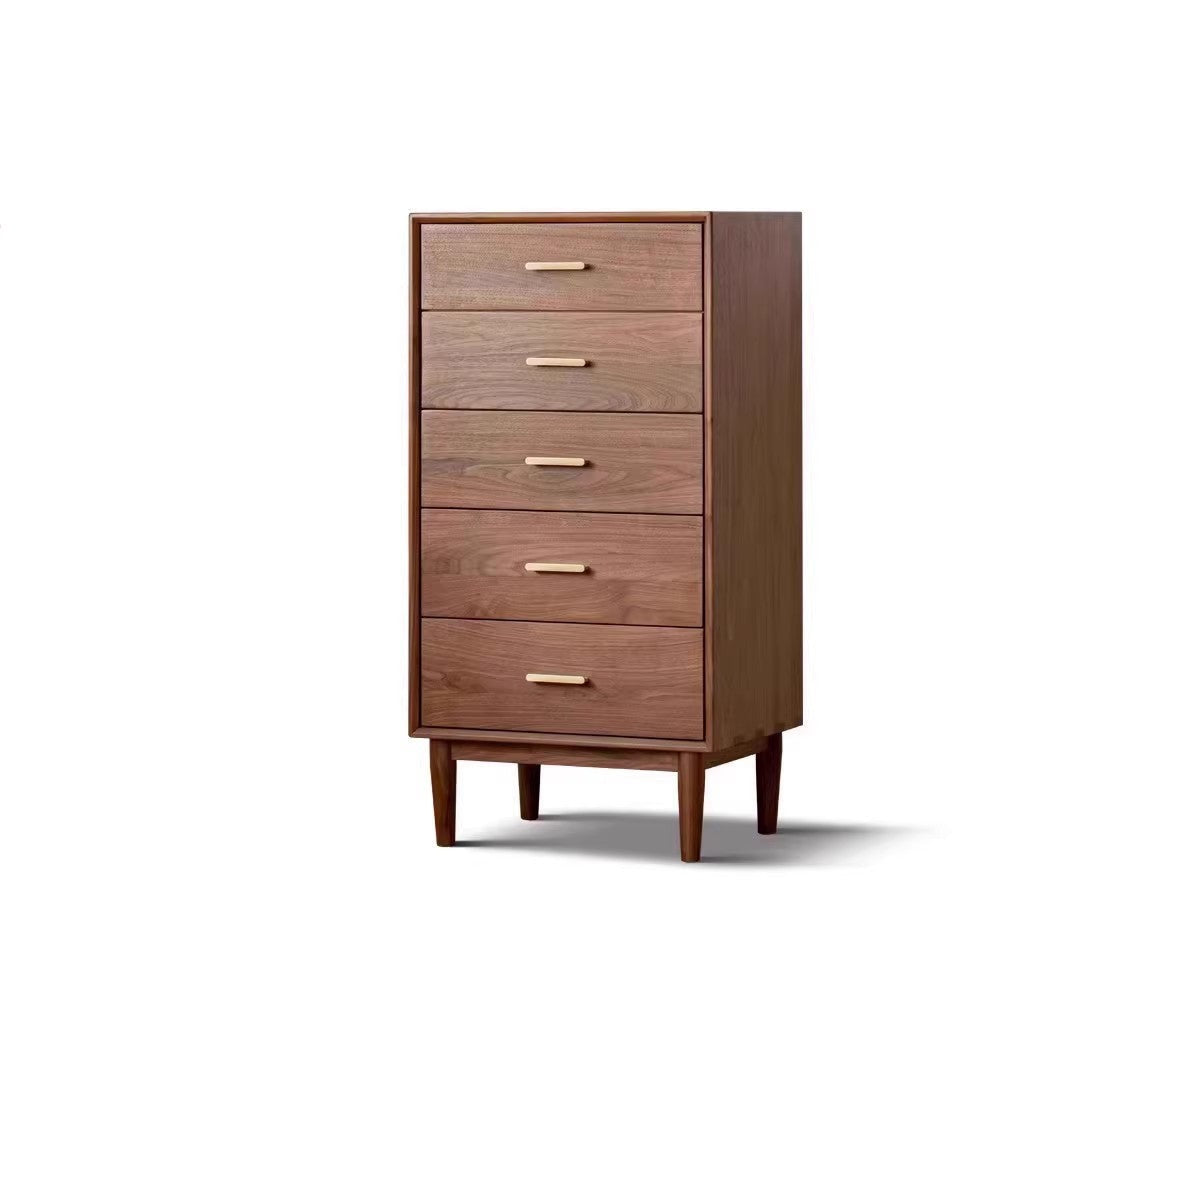 Black walnut solid wood chest of drawers Dresser)